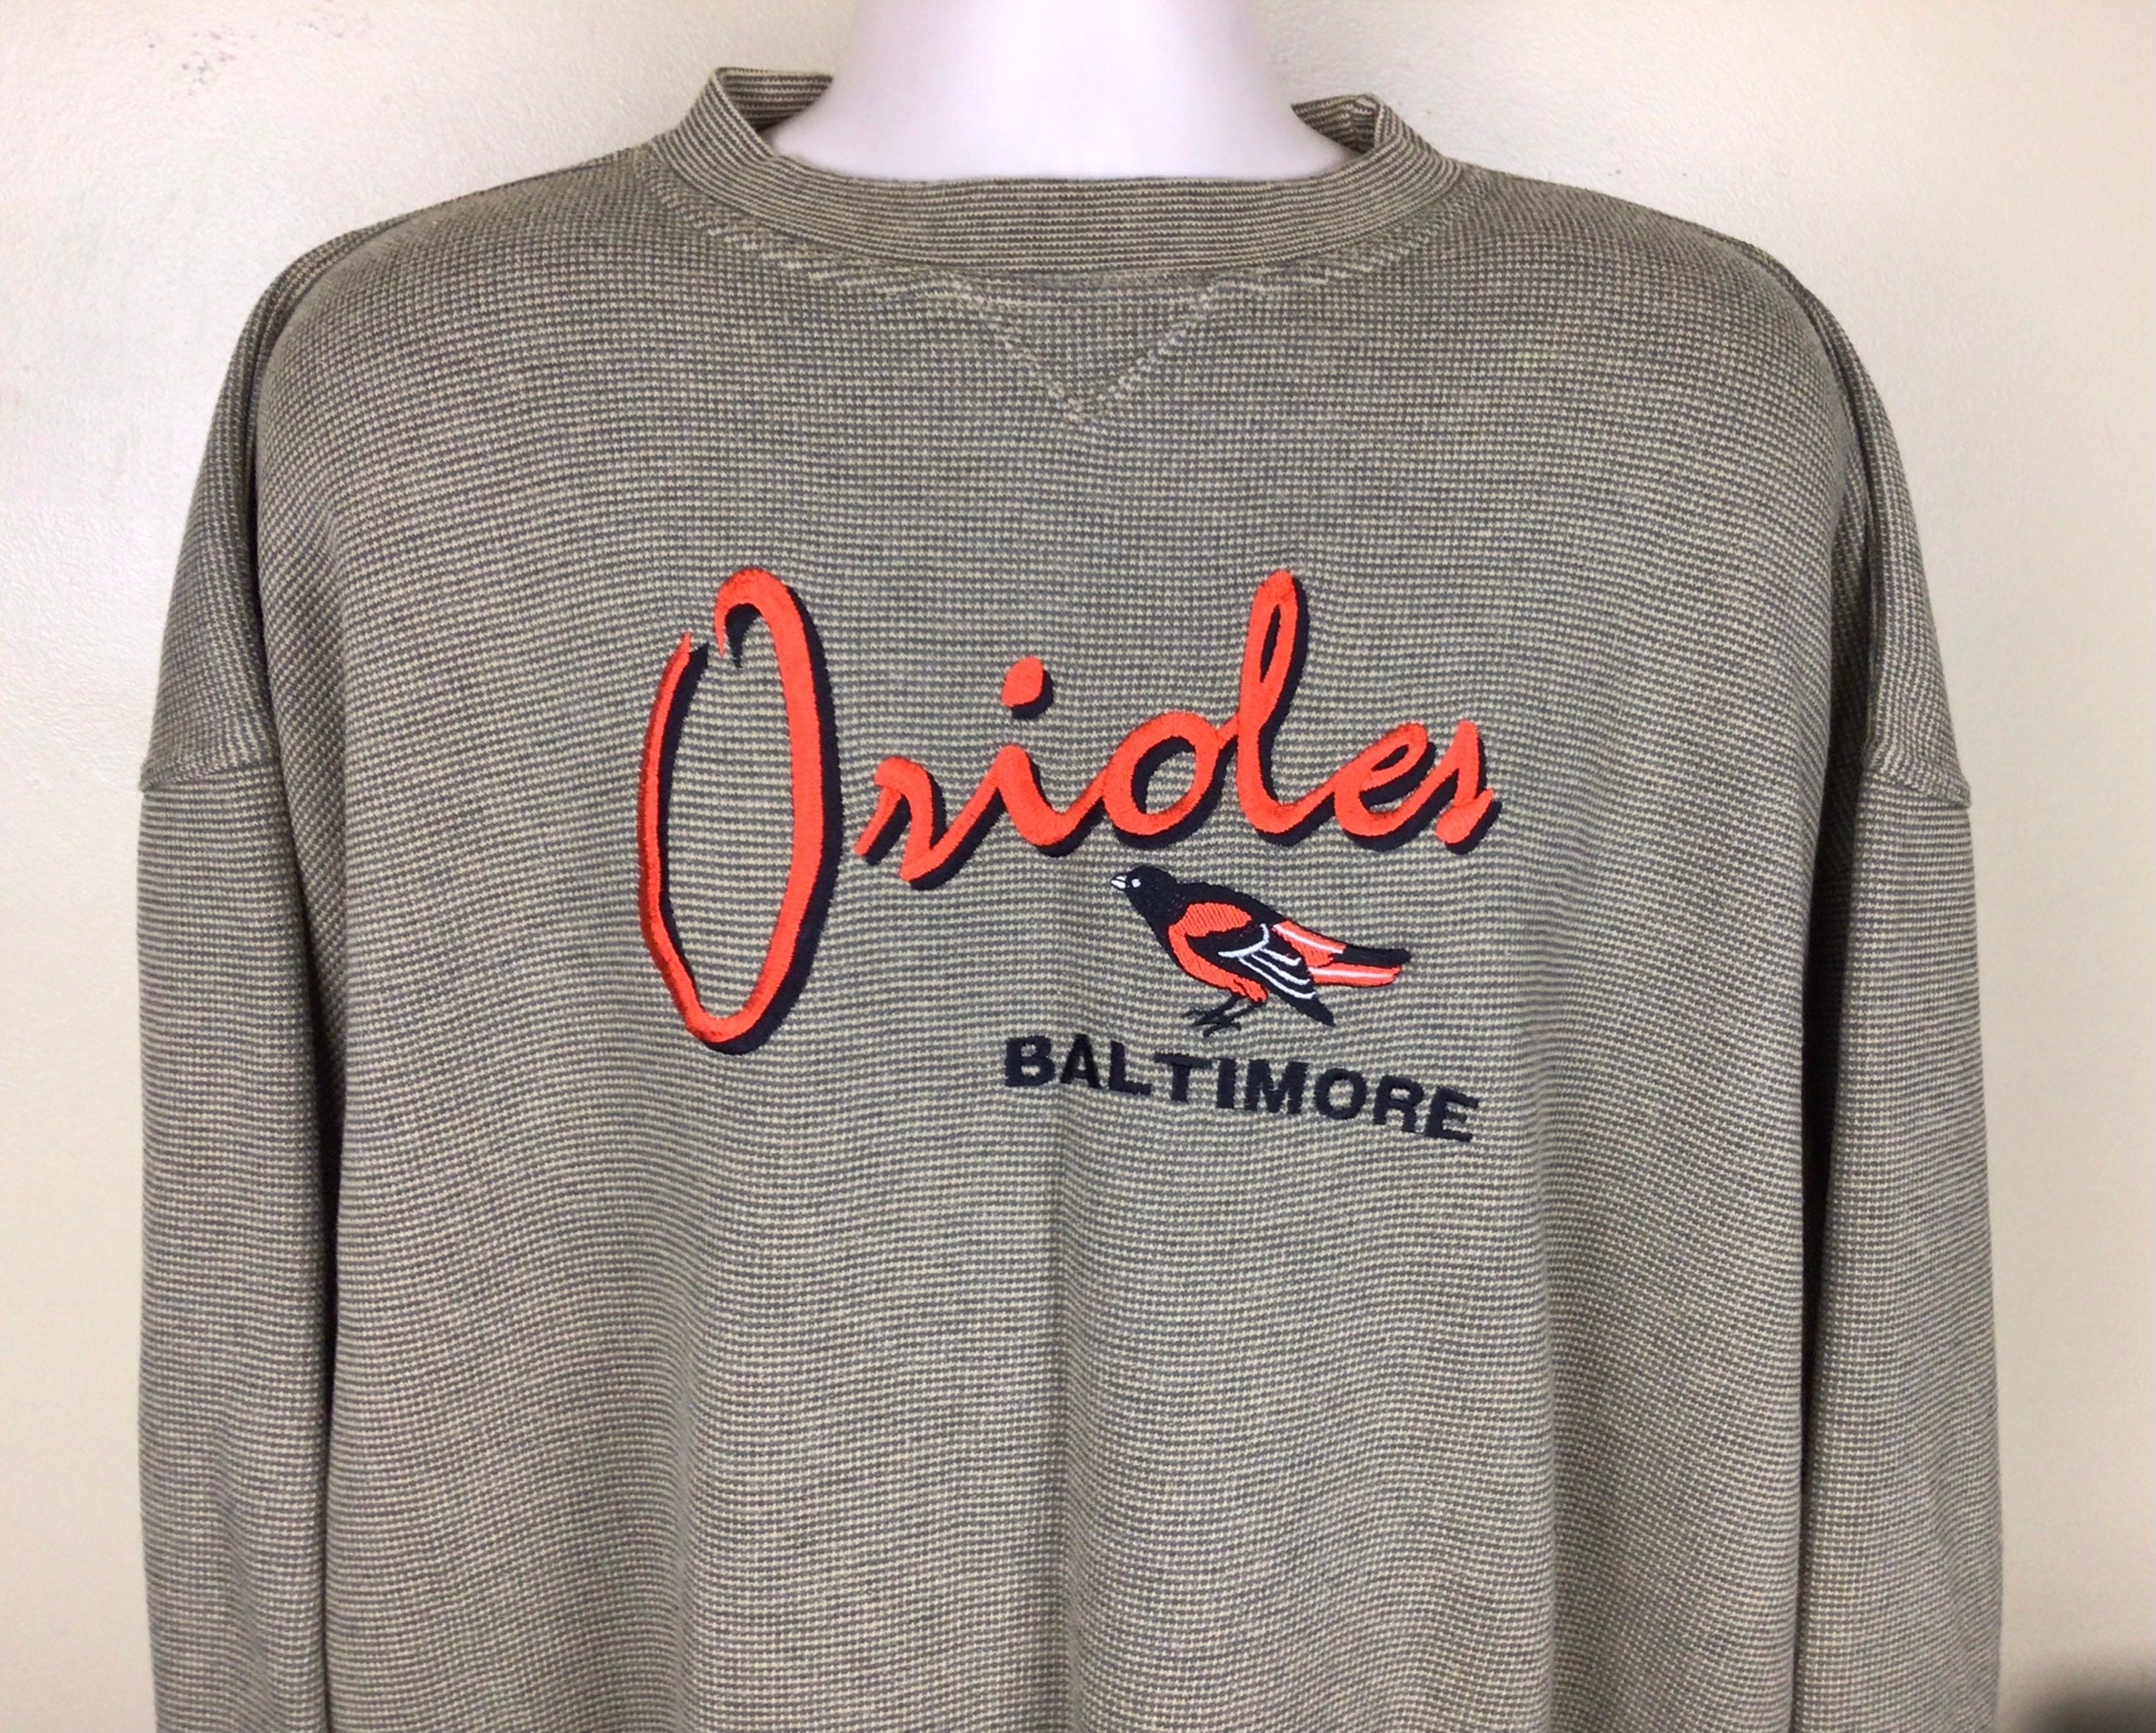 Vintage Baltimore Orioles MLB Crewneck sweatshirt. Tagged as a large.